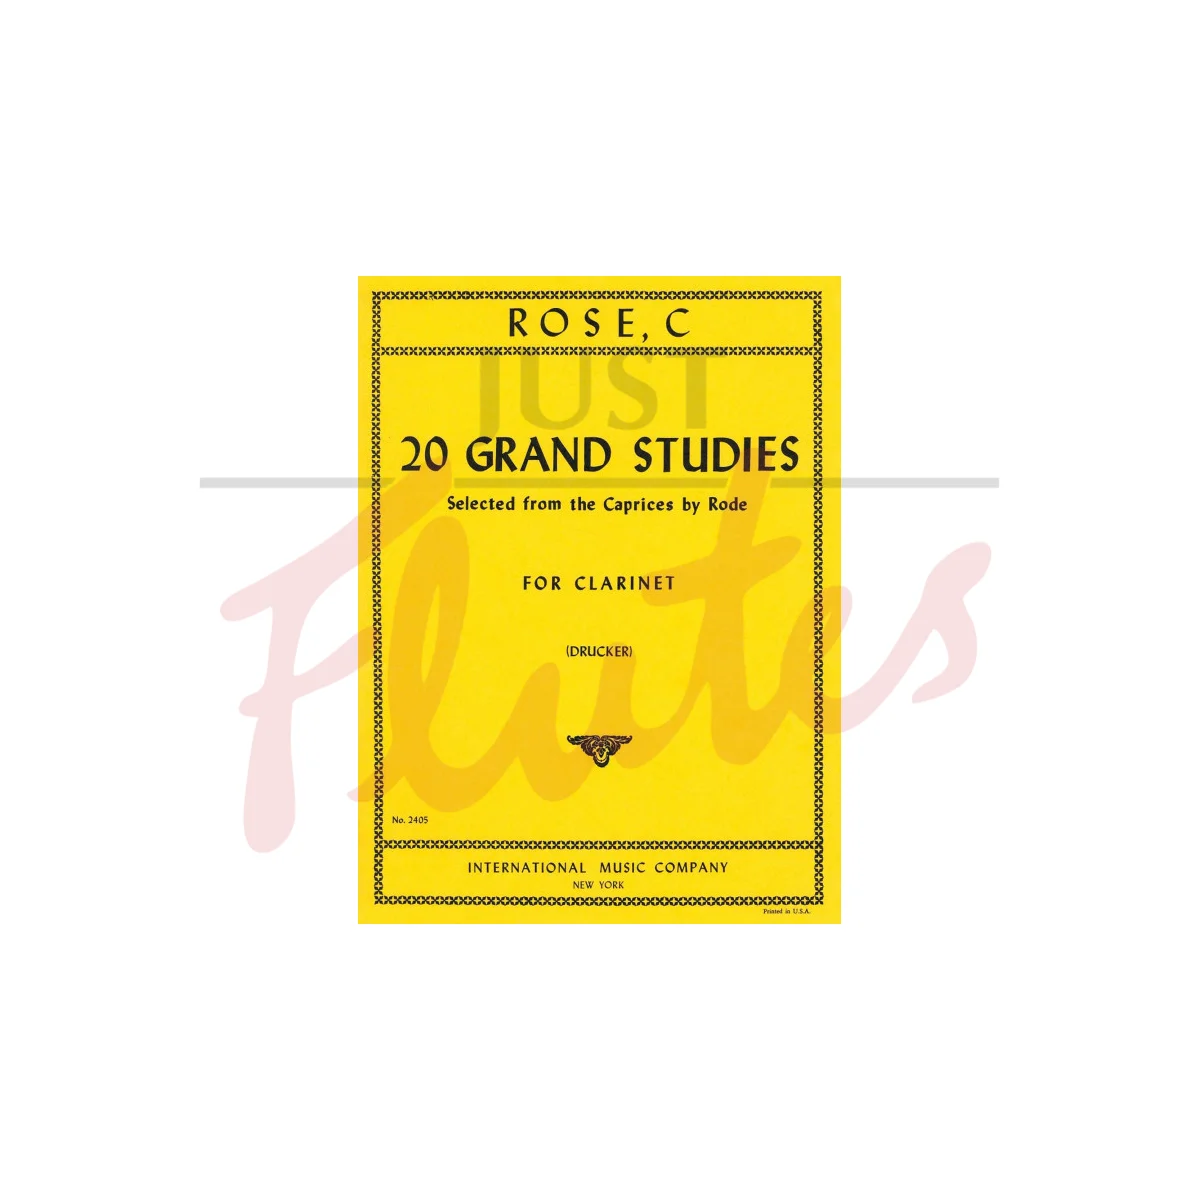 20 Grand Studies for Clarinet